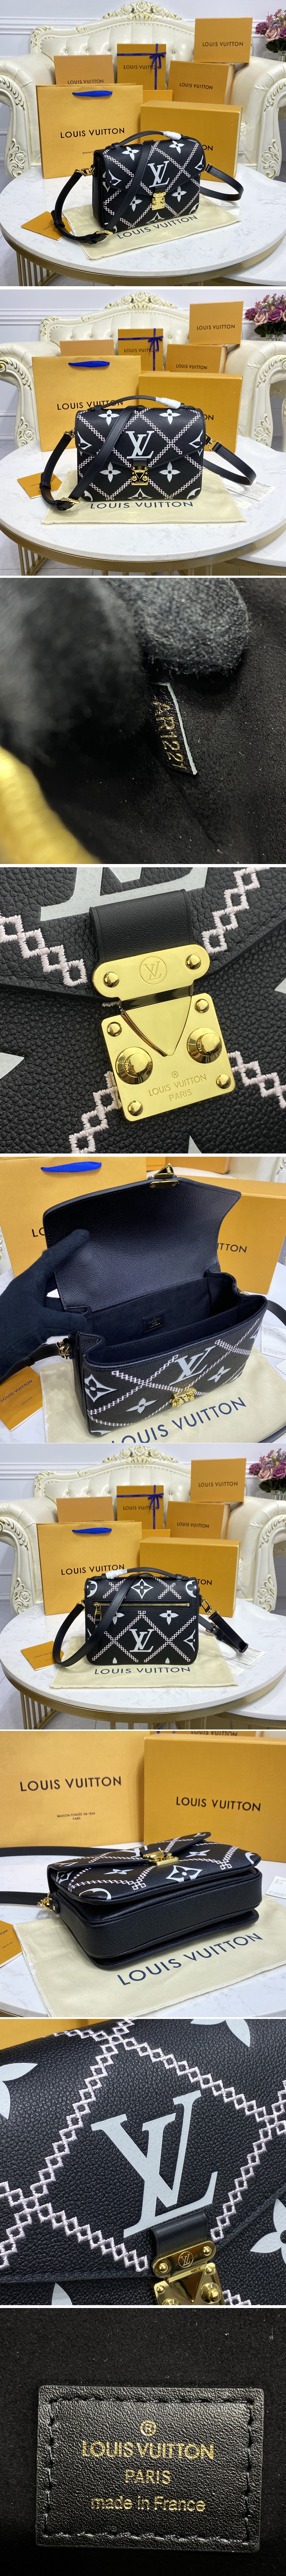 Louis Vuitton M46028 LV Pochette Metis handbag in Black/Beige Monogram  Empreinte leather Replica sale online ,buy fake bag